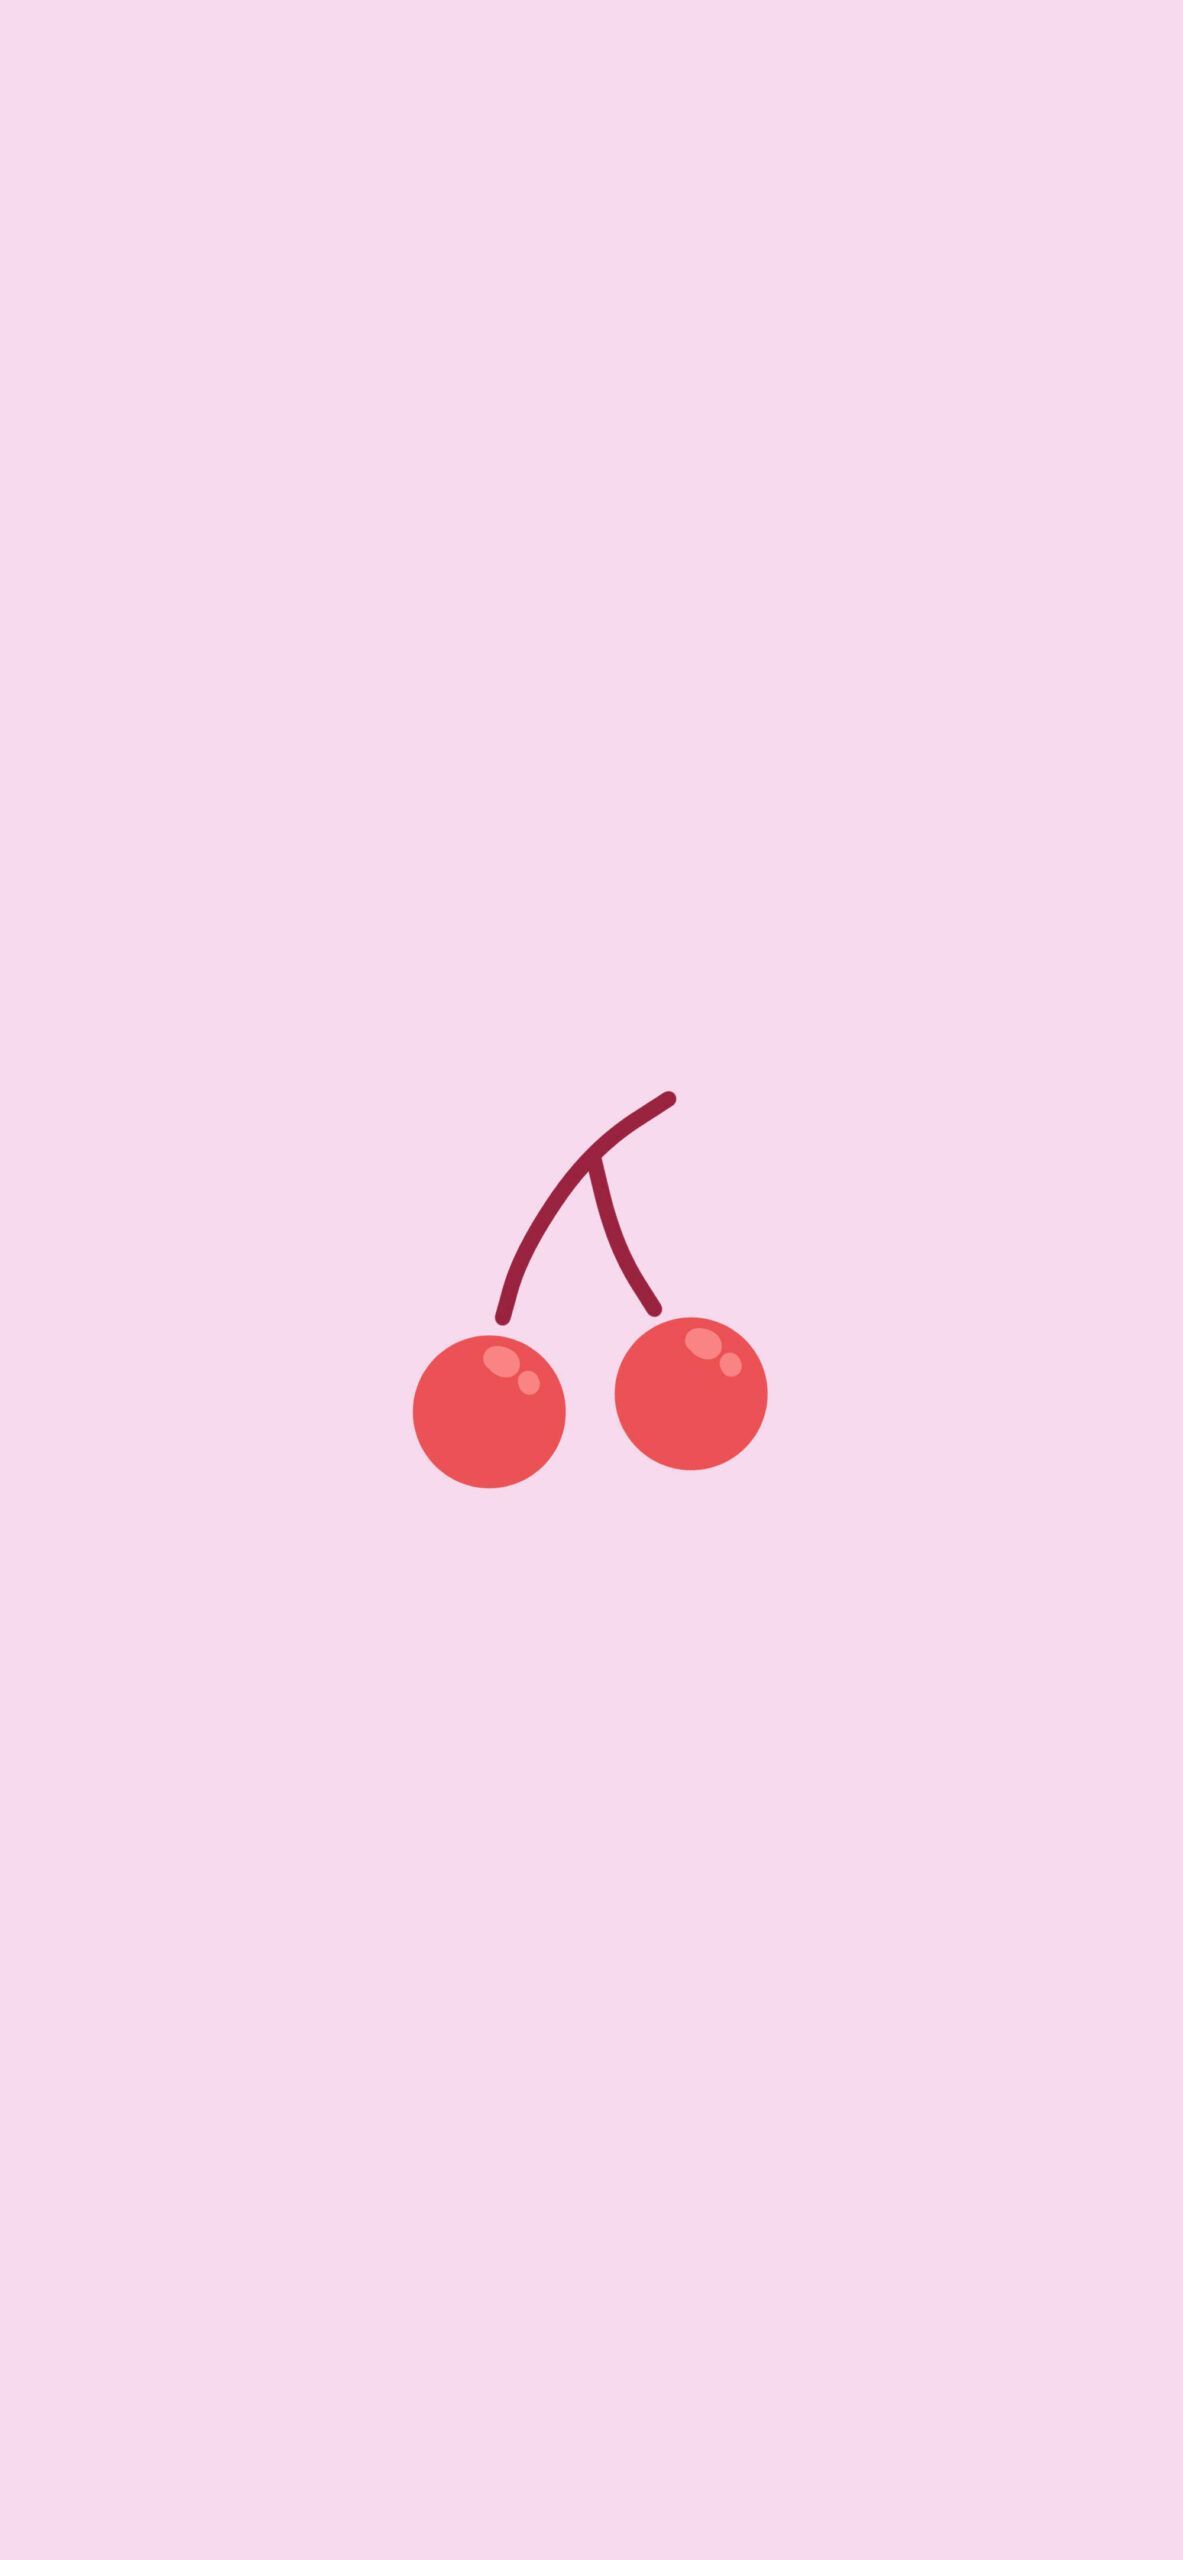  Rosa Hintergrundbild 1183x2560. Cherries Pink Wallpaper Aesthetic Wallpaper for iPhone